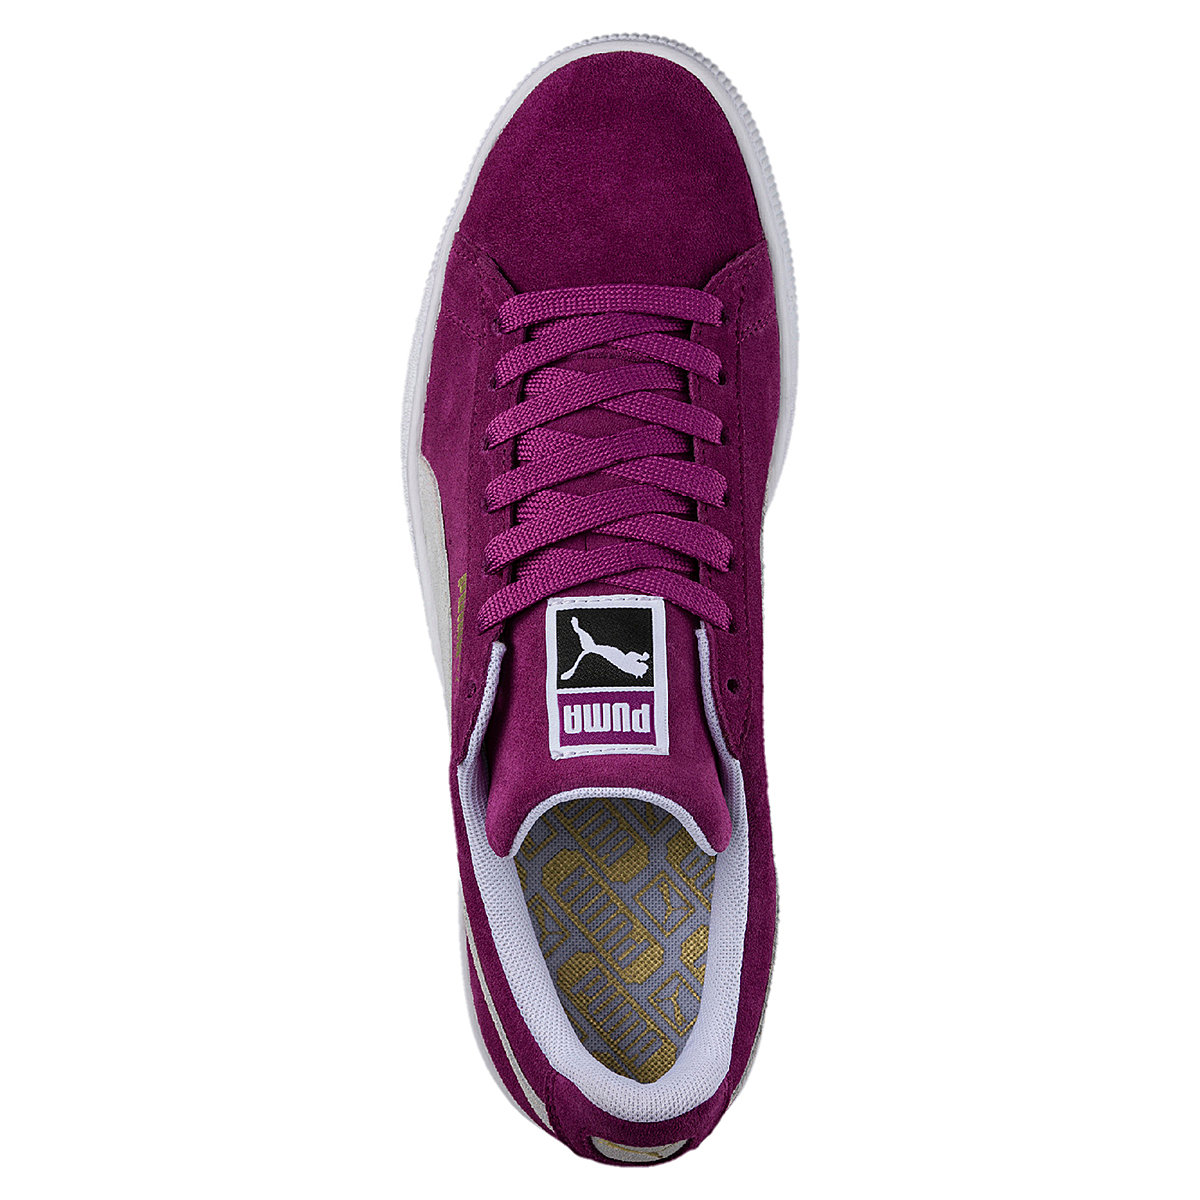 Puma Suede Classic Unisex Sneaker Low-Top violett 365347 12